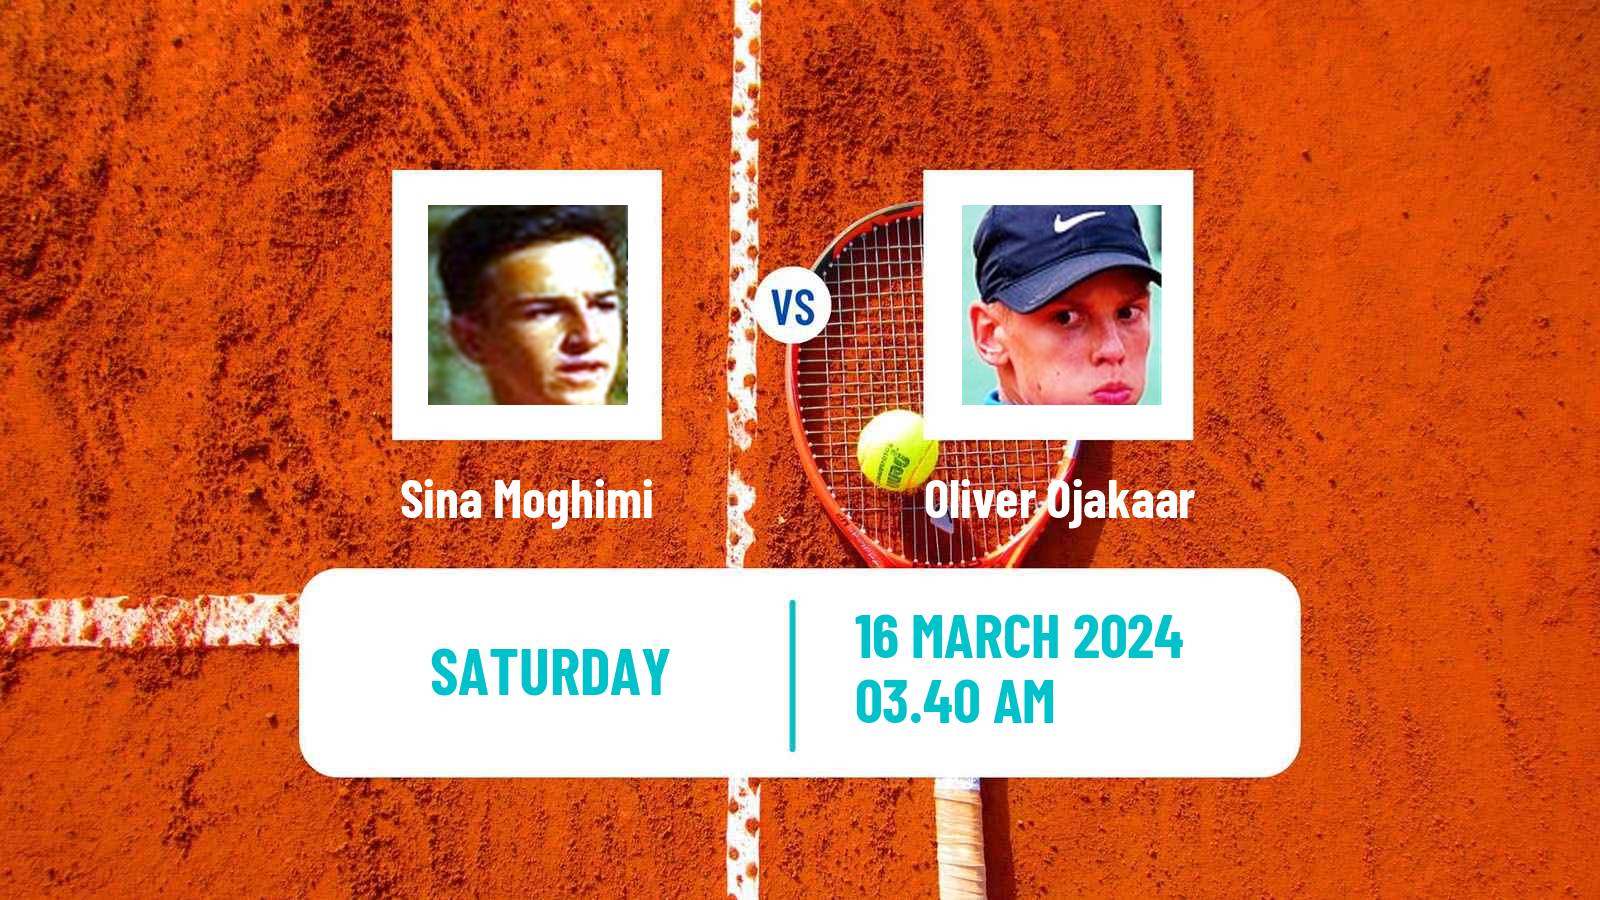 Tennis Davis Cup World Group II Sina Moghimi - Oliver Ojakaar